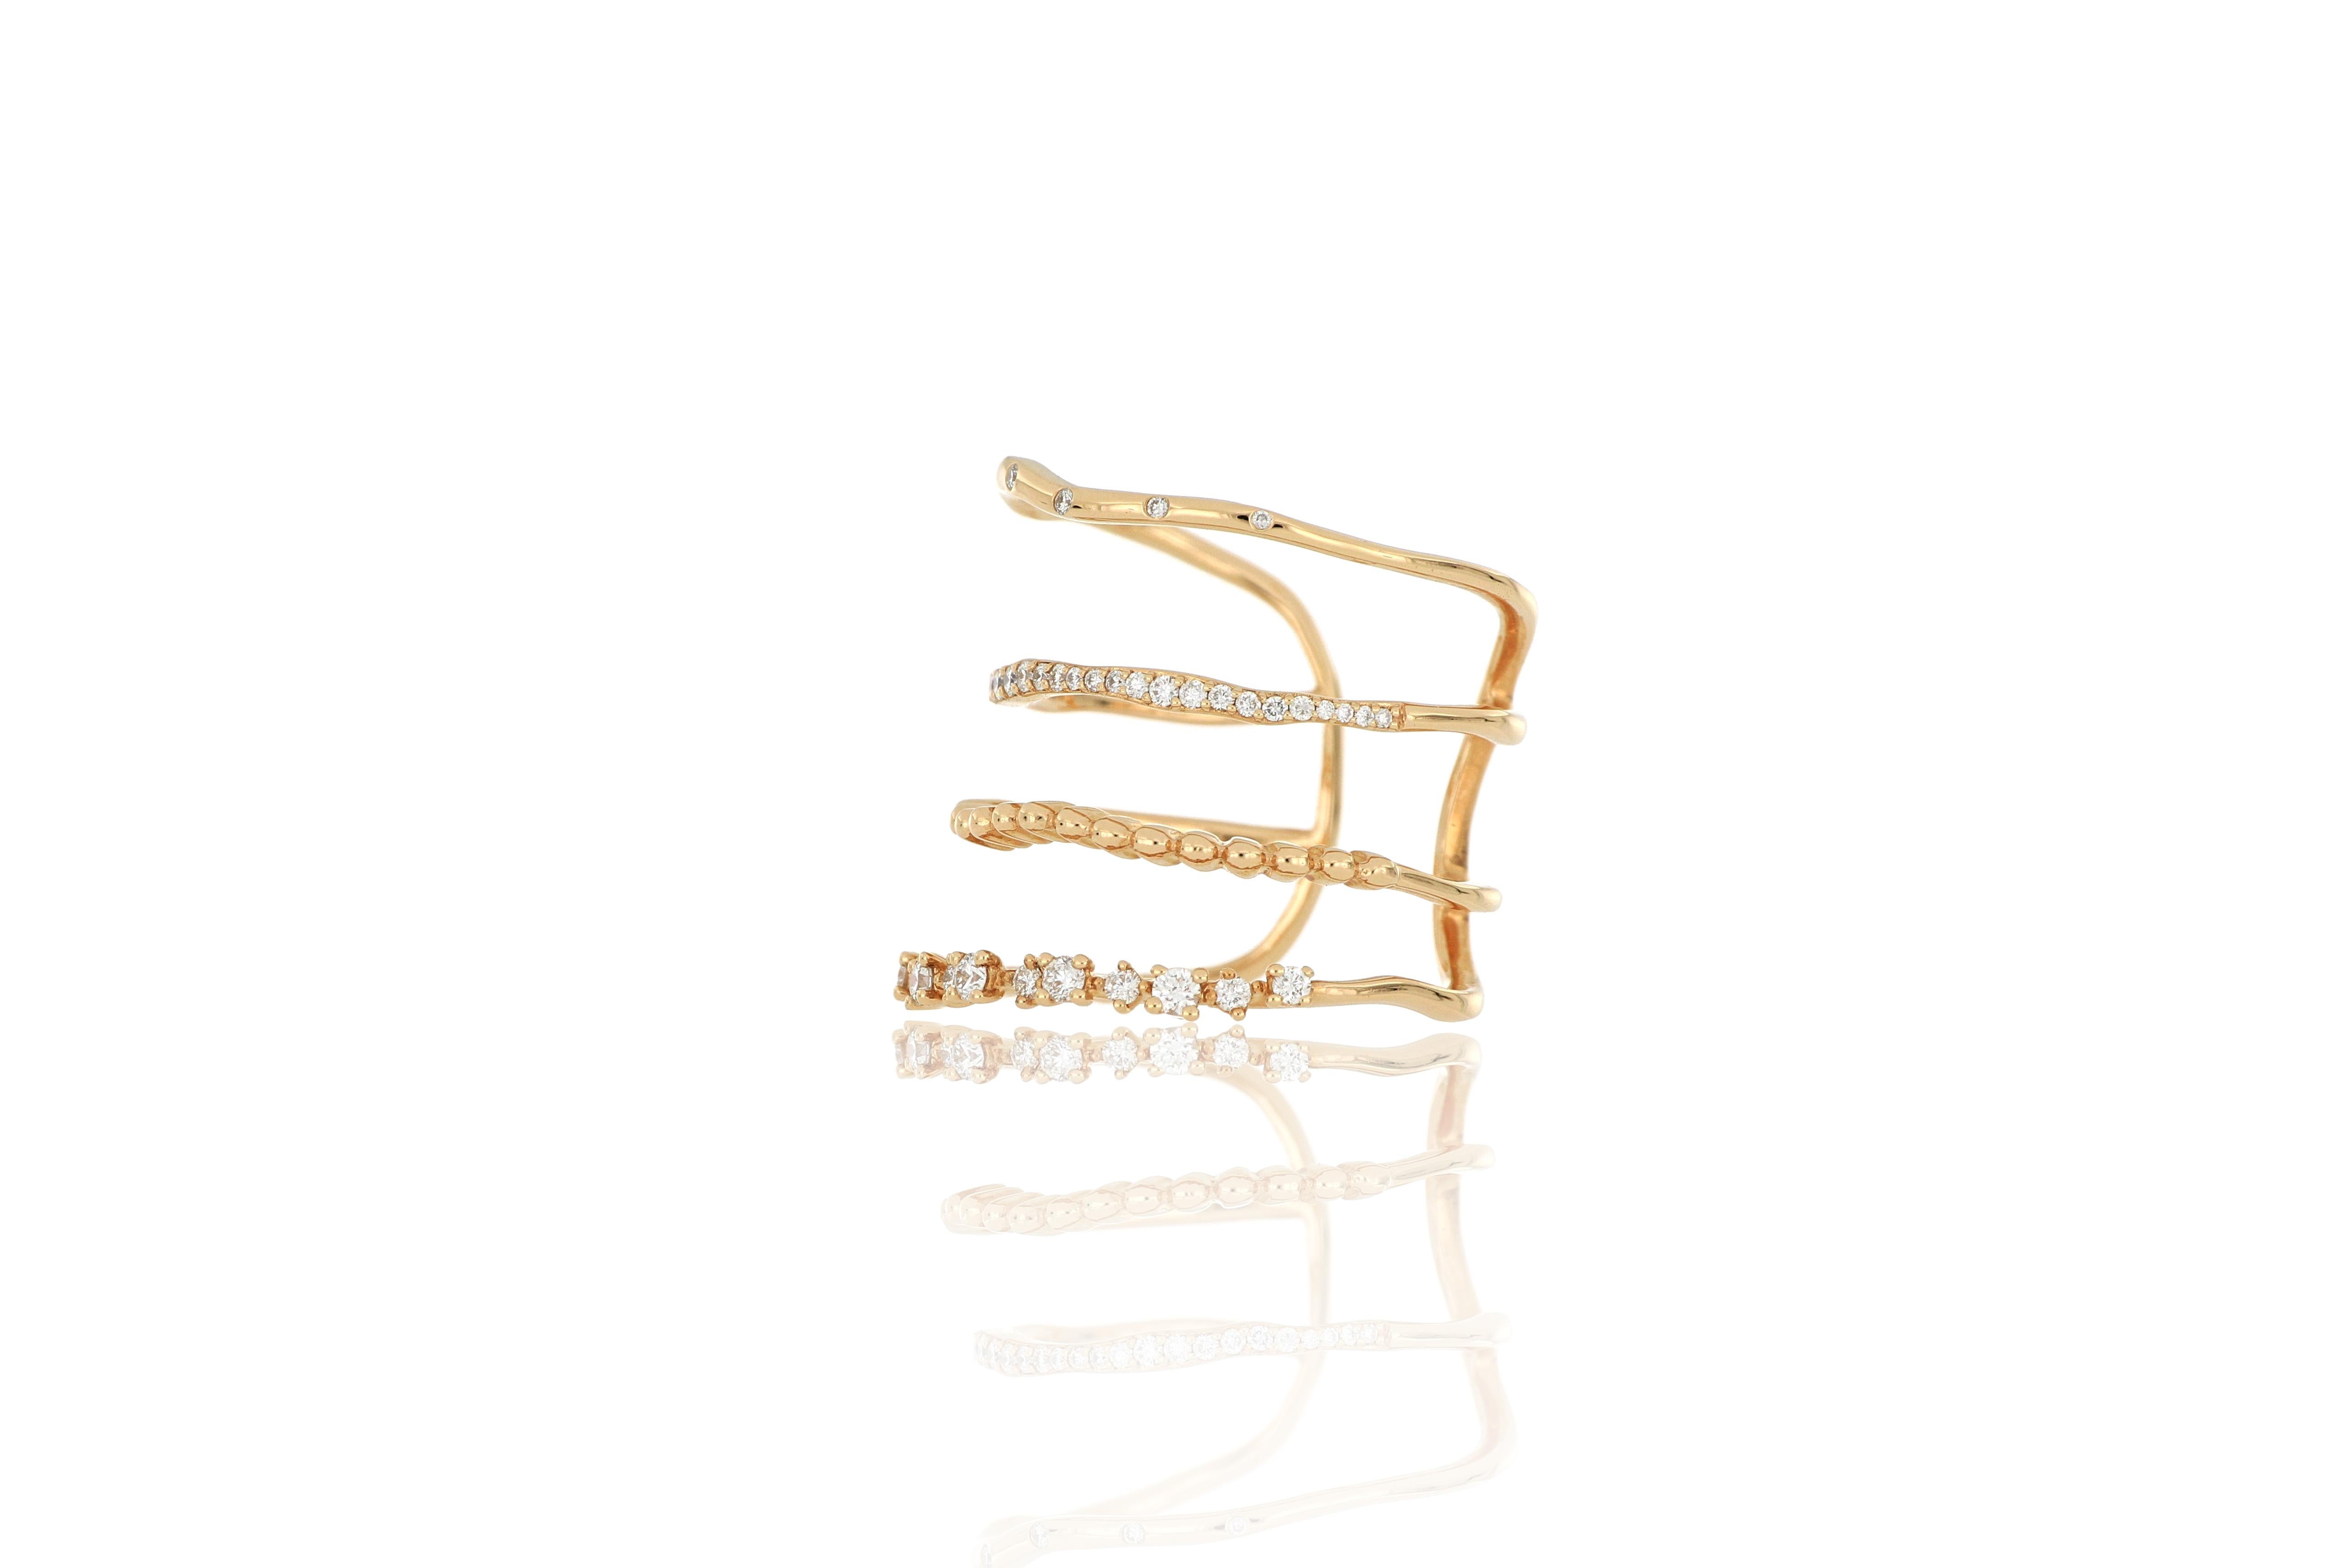 Contemporary 18 Karat Rose Gold Diamond Fashion Ring For Sale